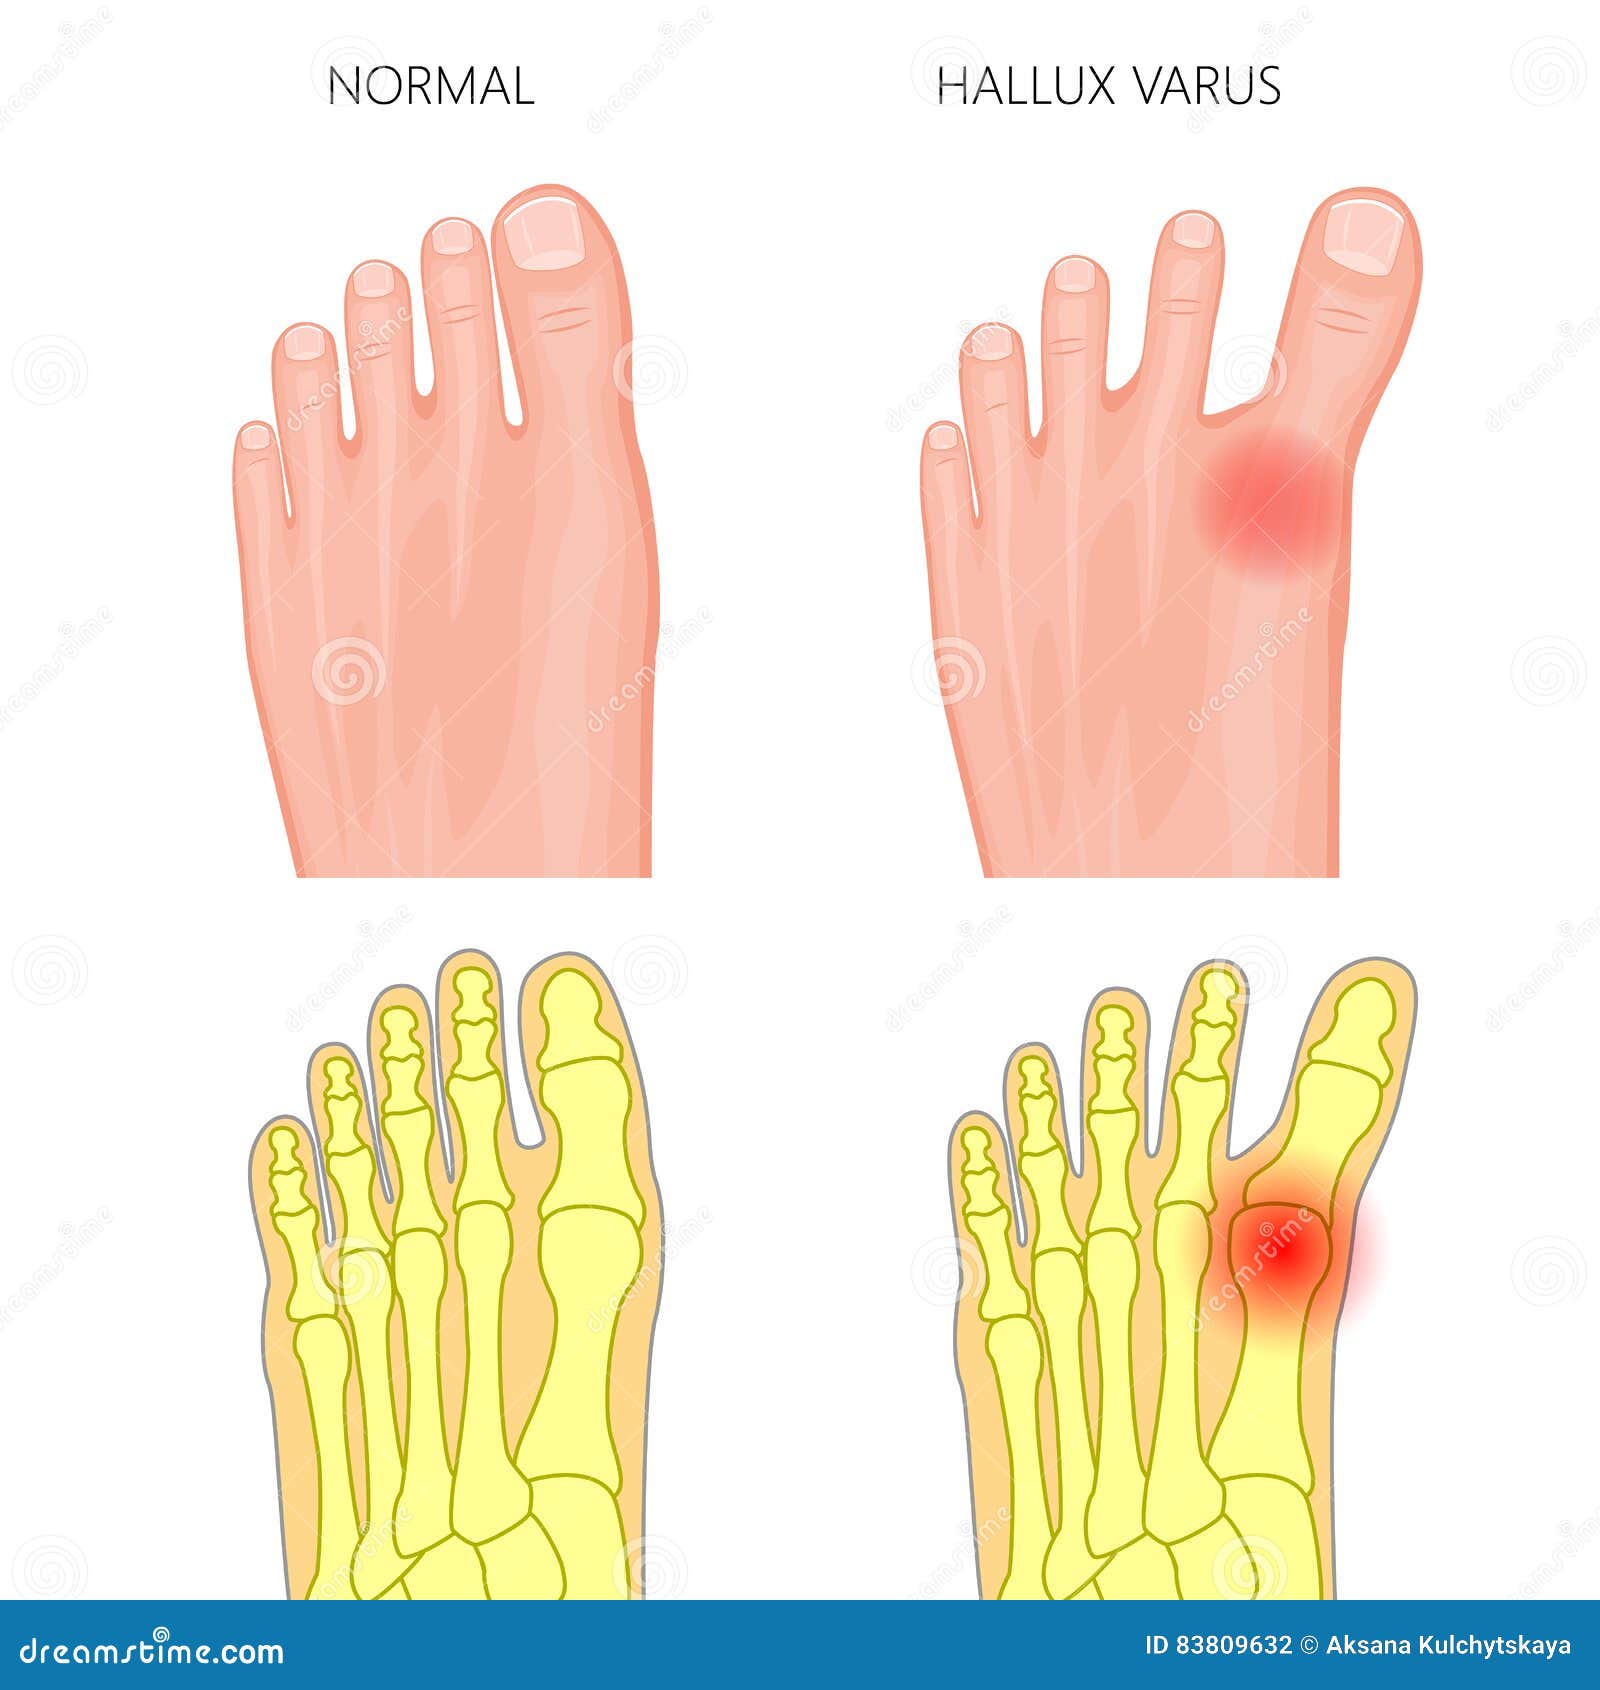 normal foot and hallux varus